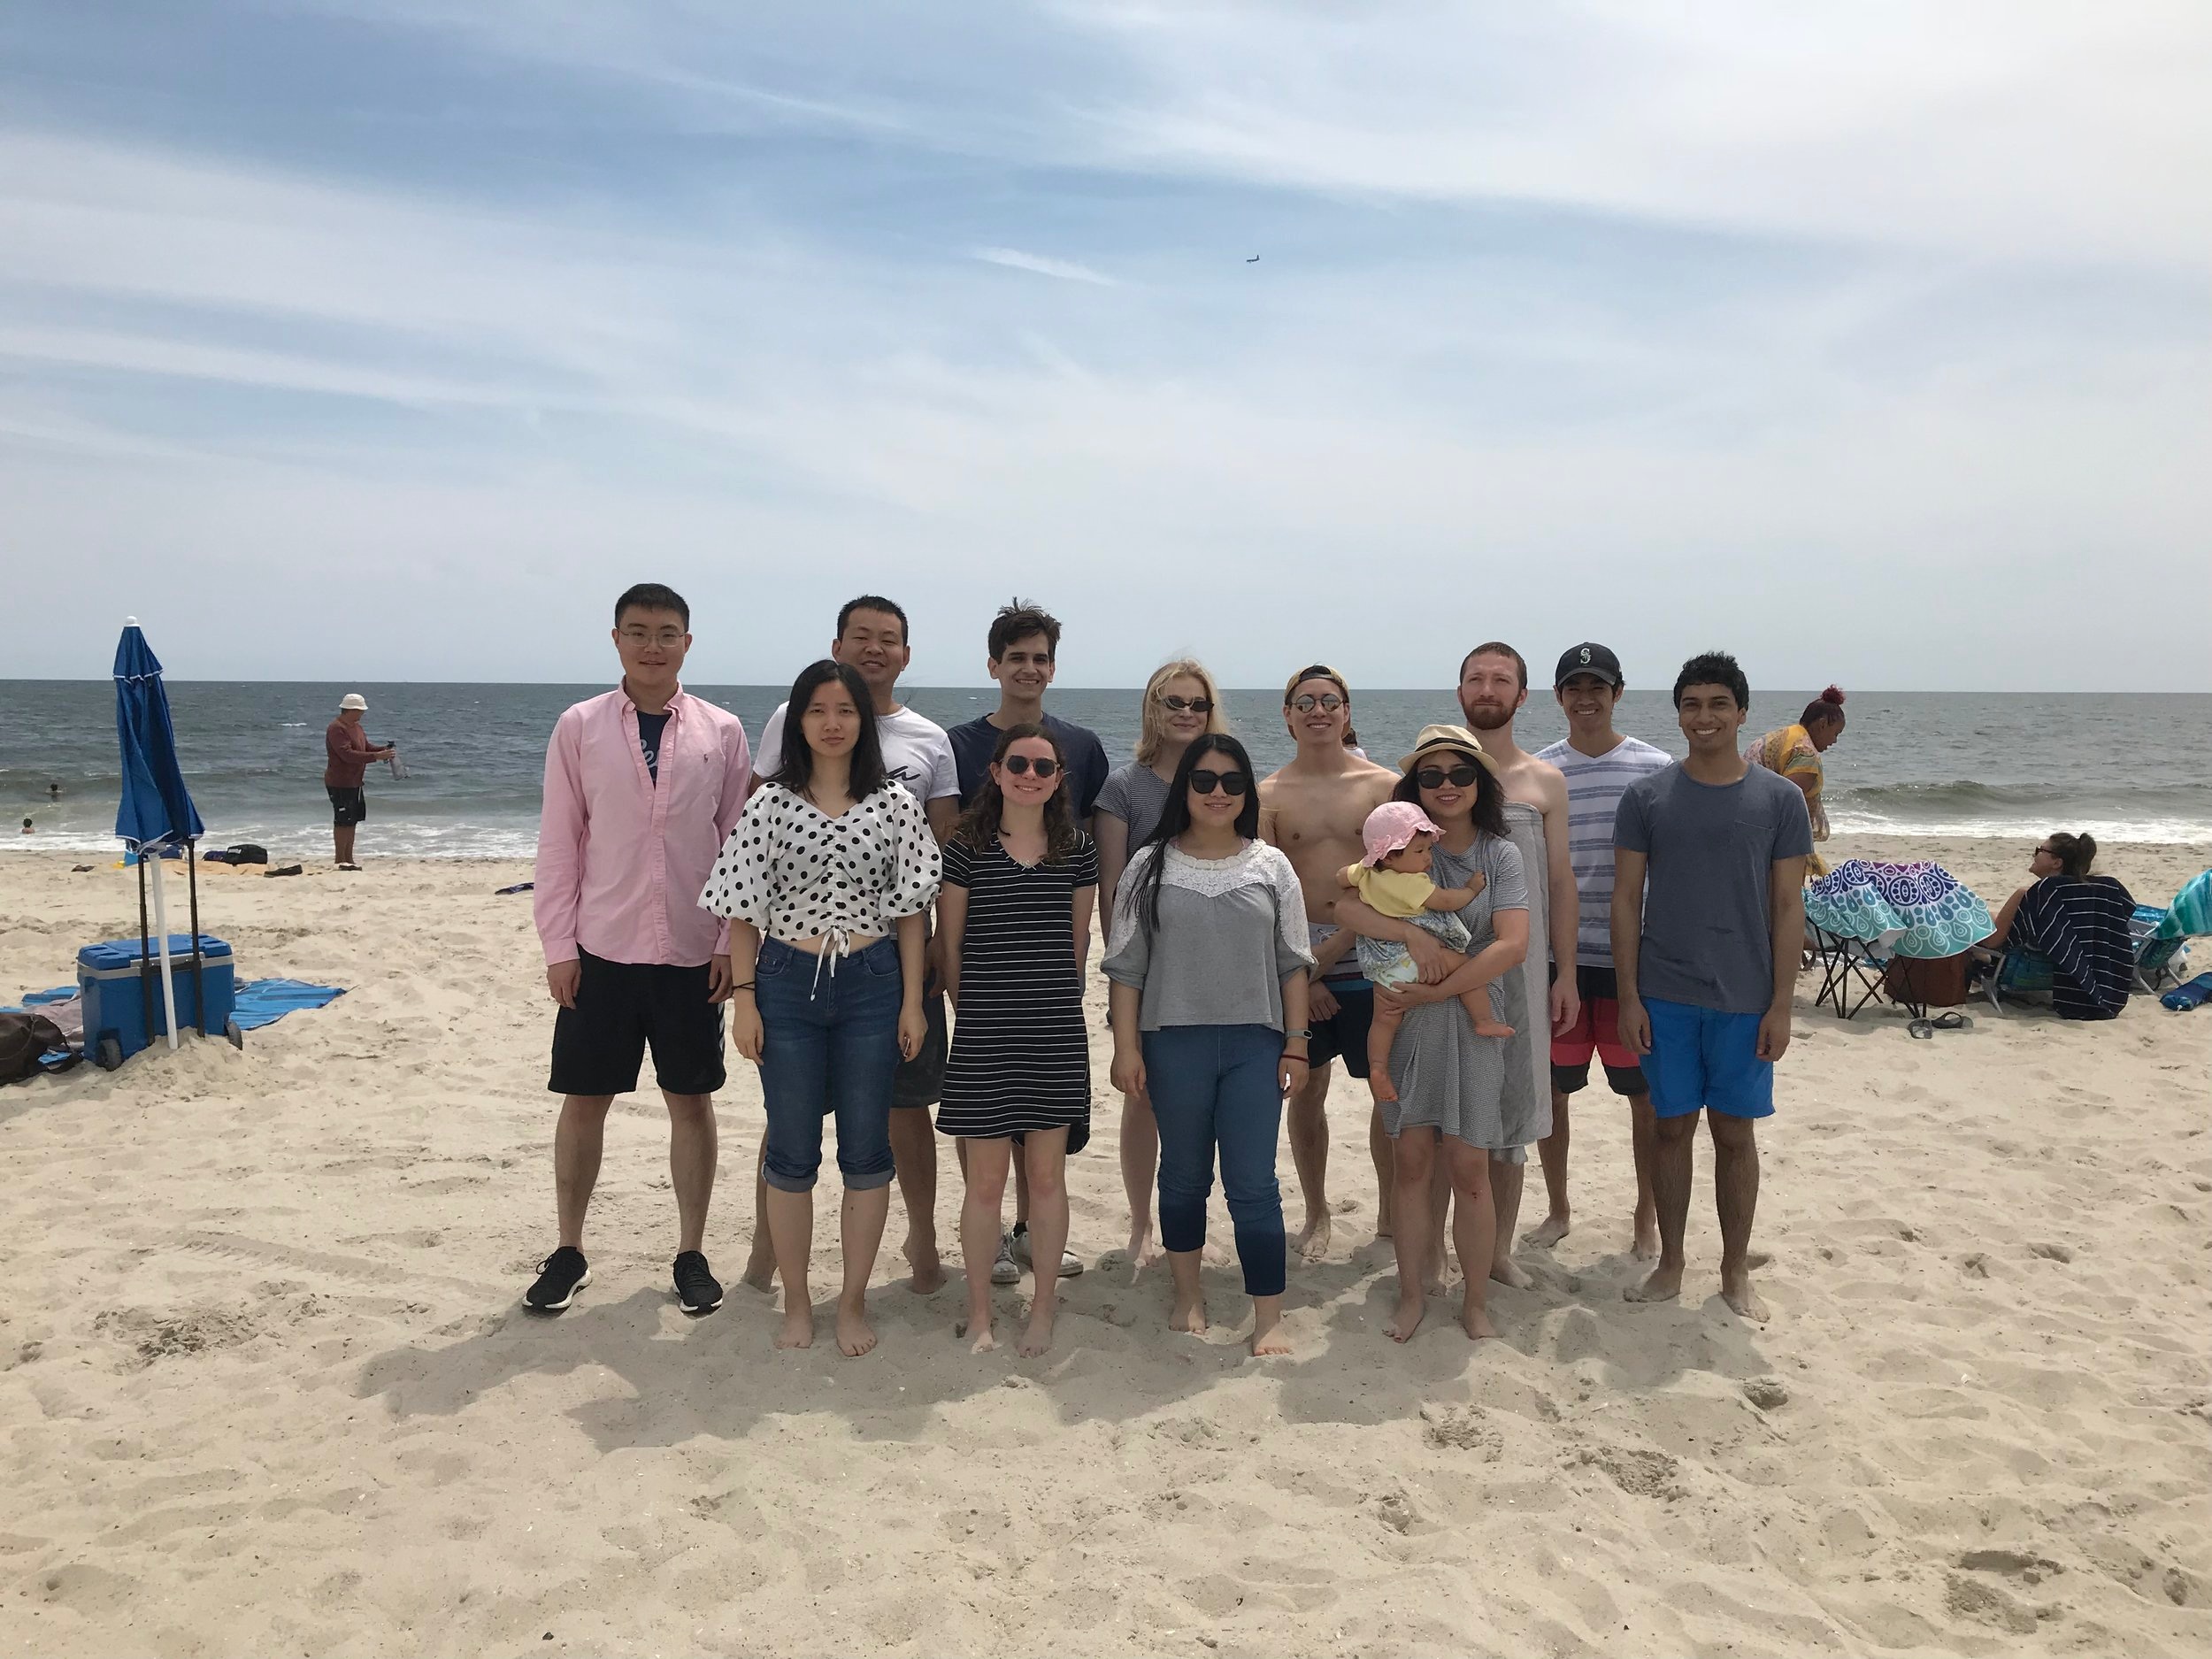 2019 Summer Group Photo at Rockaway Beach!